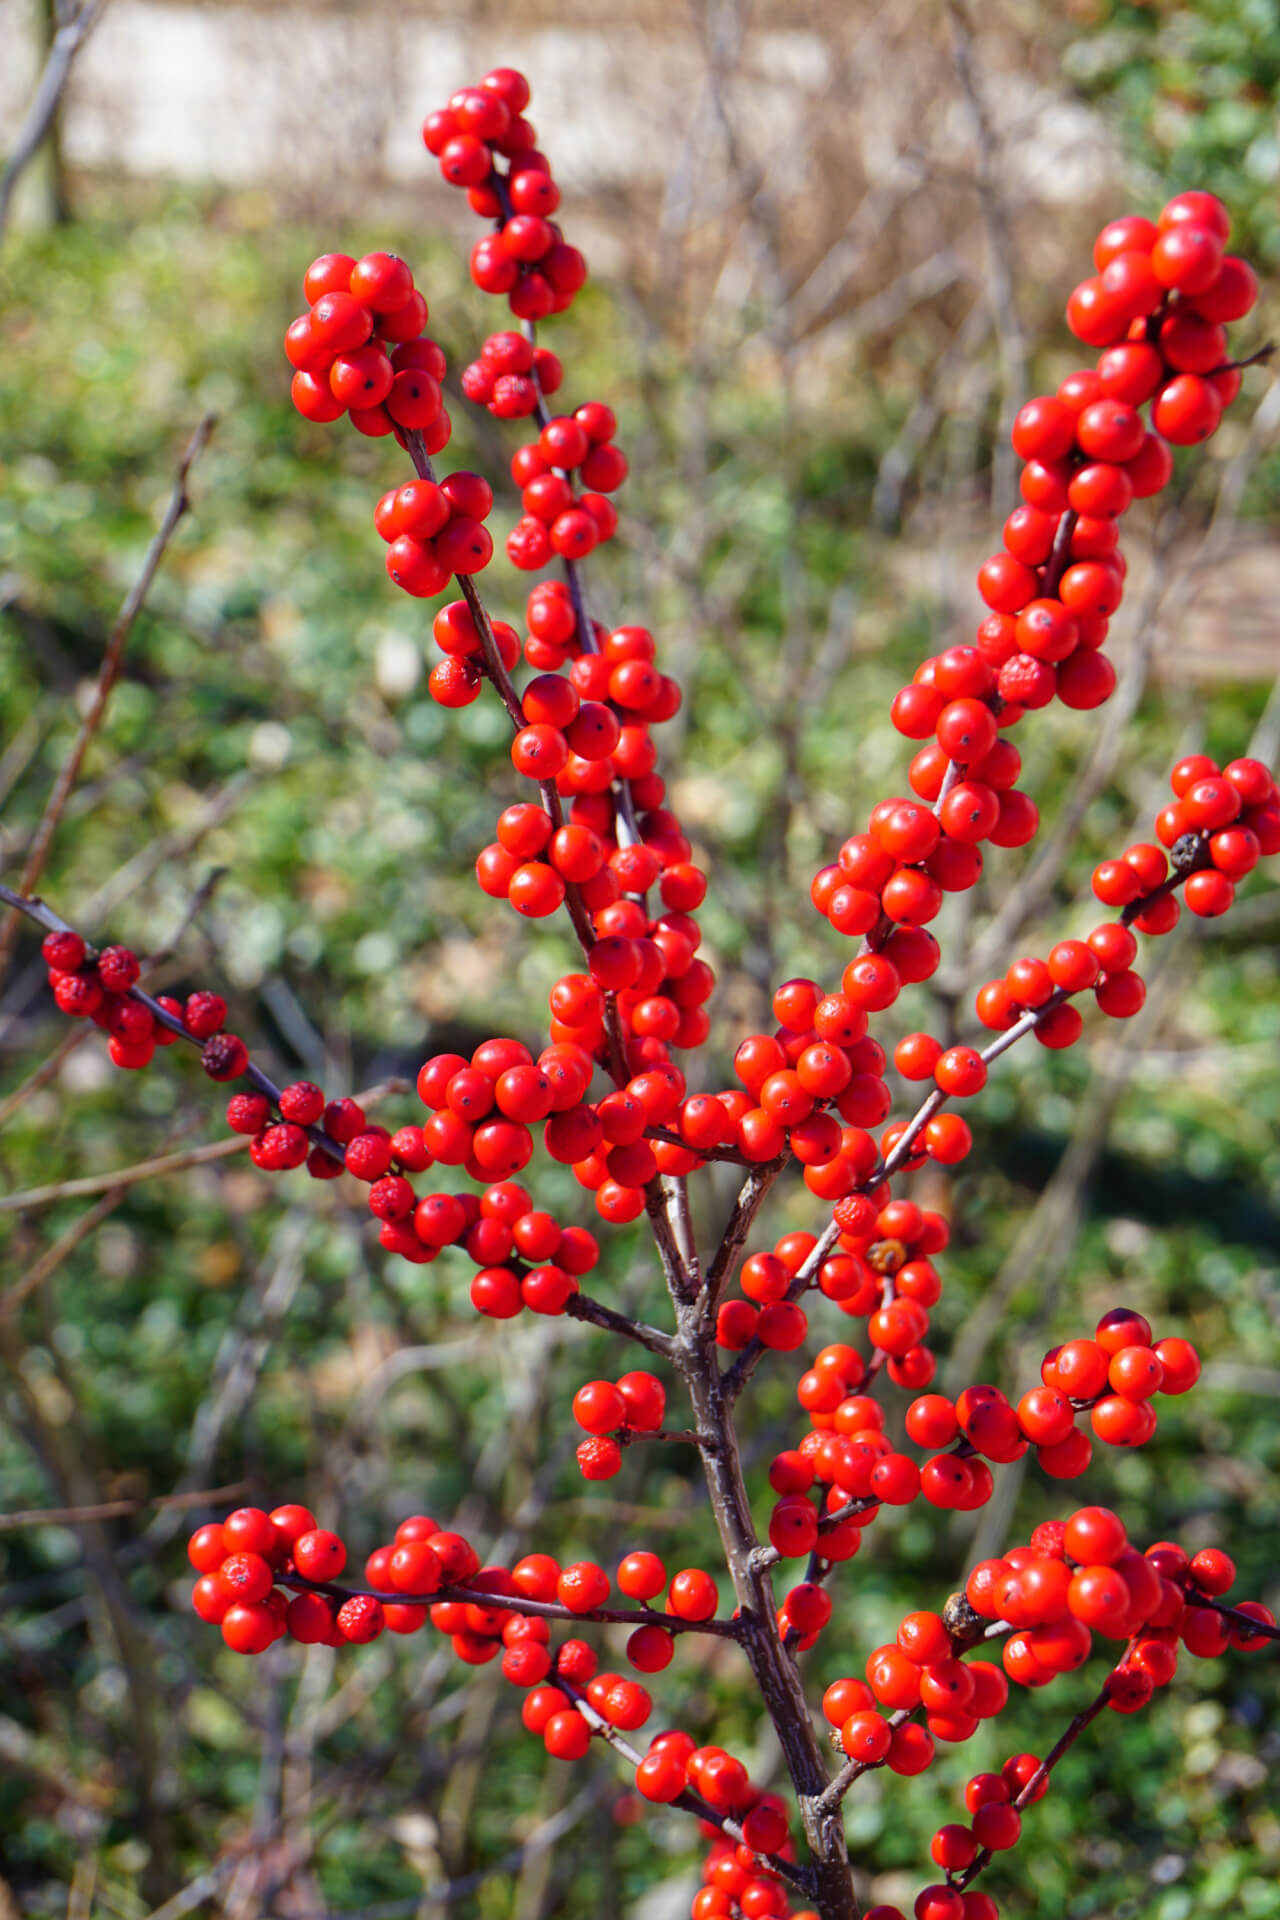 Winterberry "Winter Red"